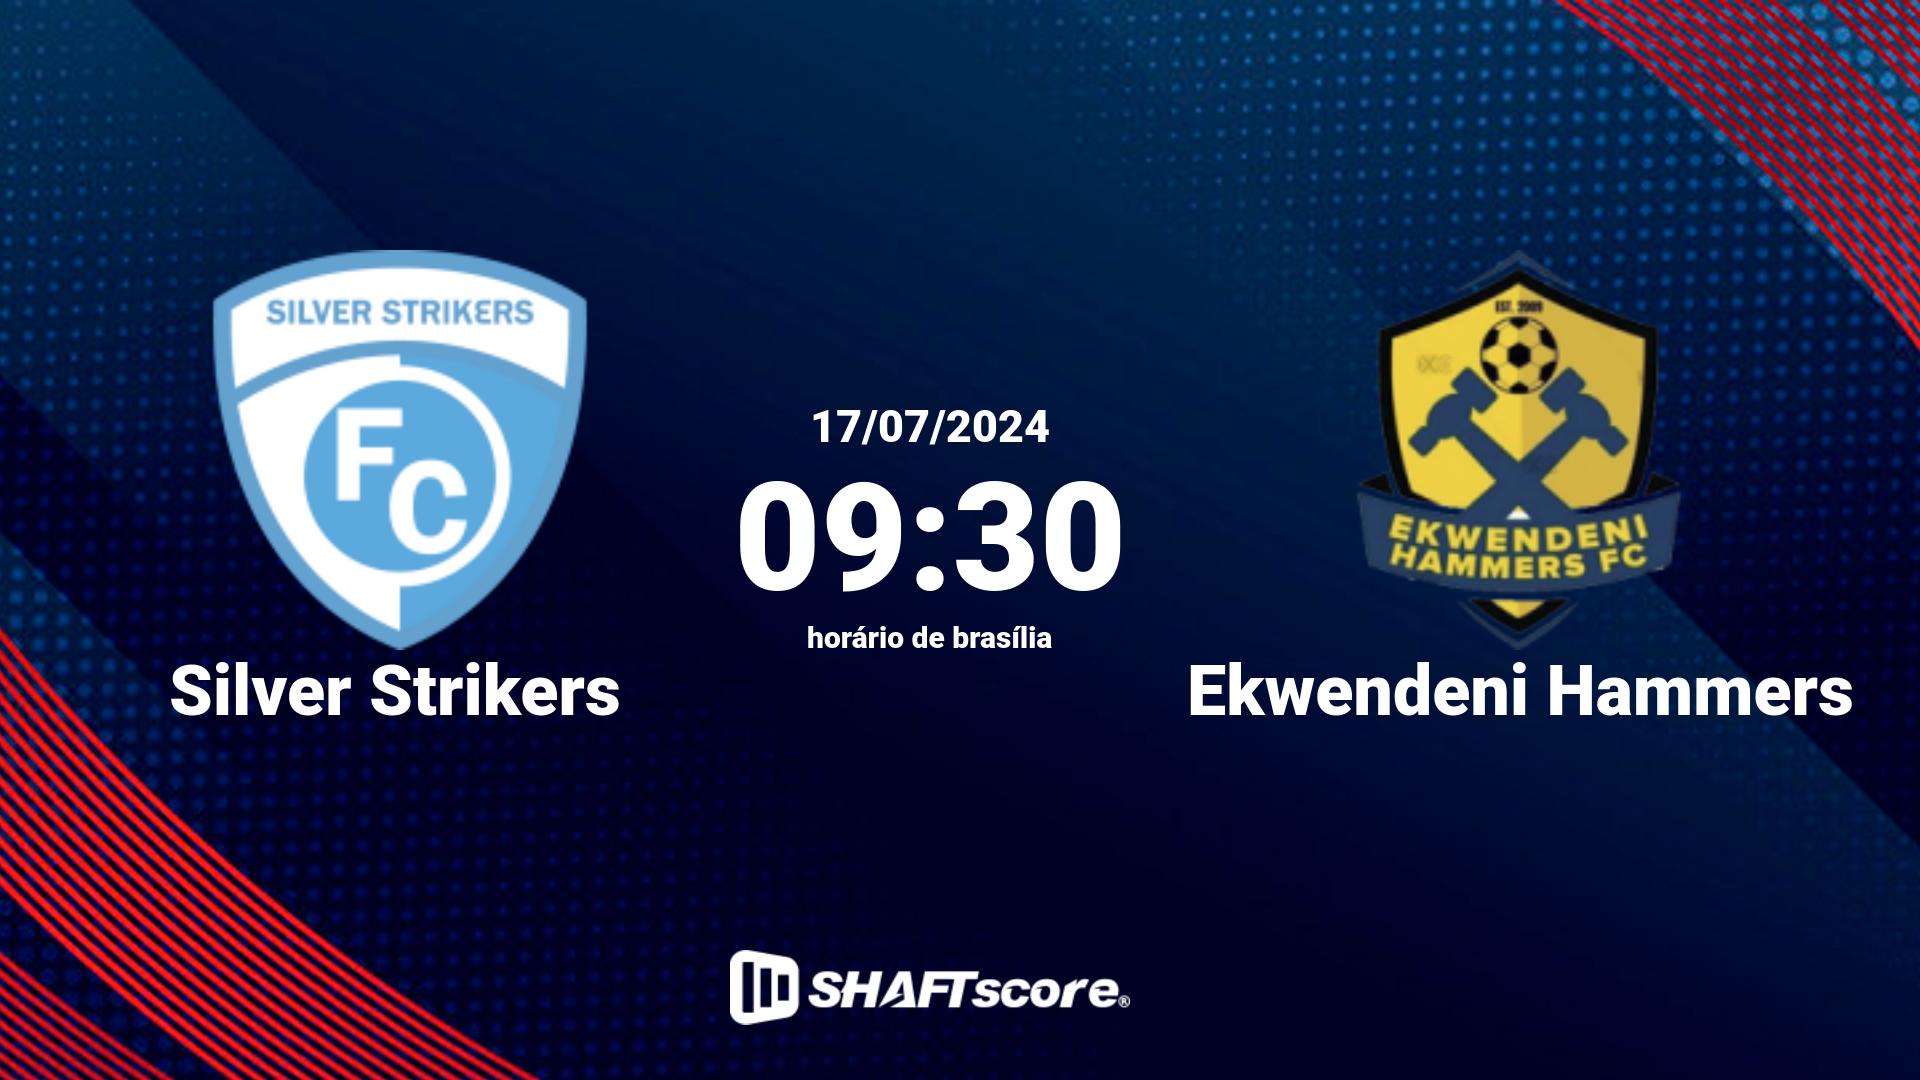 Estatísticas do jogo Silver Strikers vs Ekwendeni Hammers 17.07 09:30